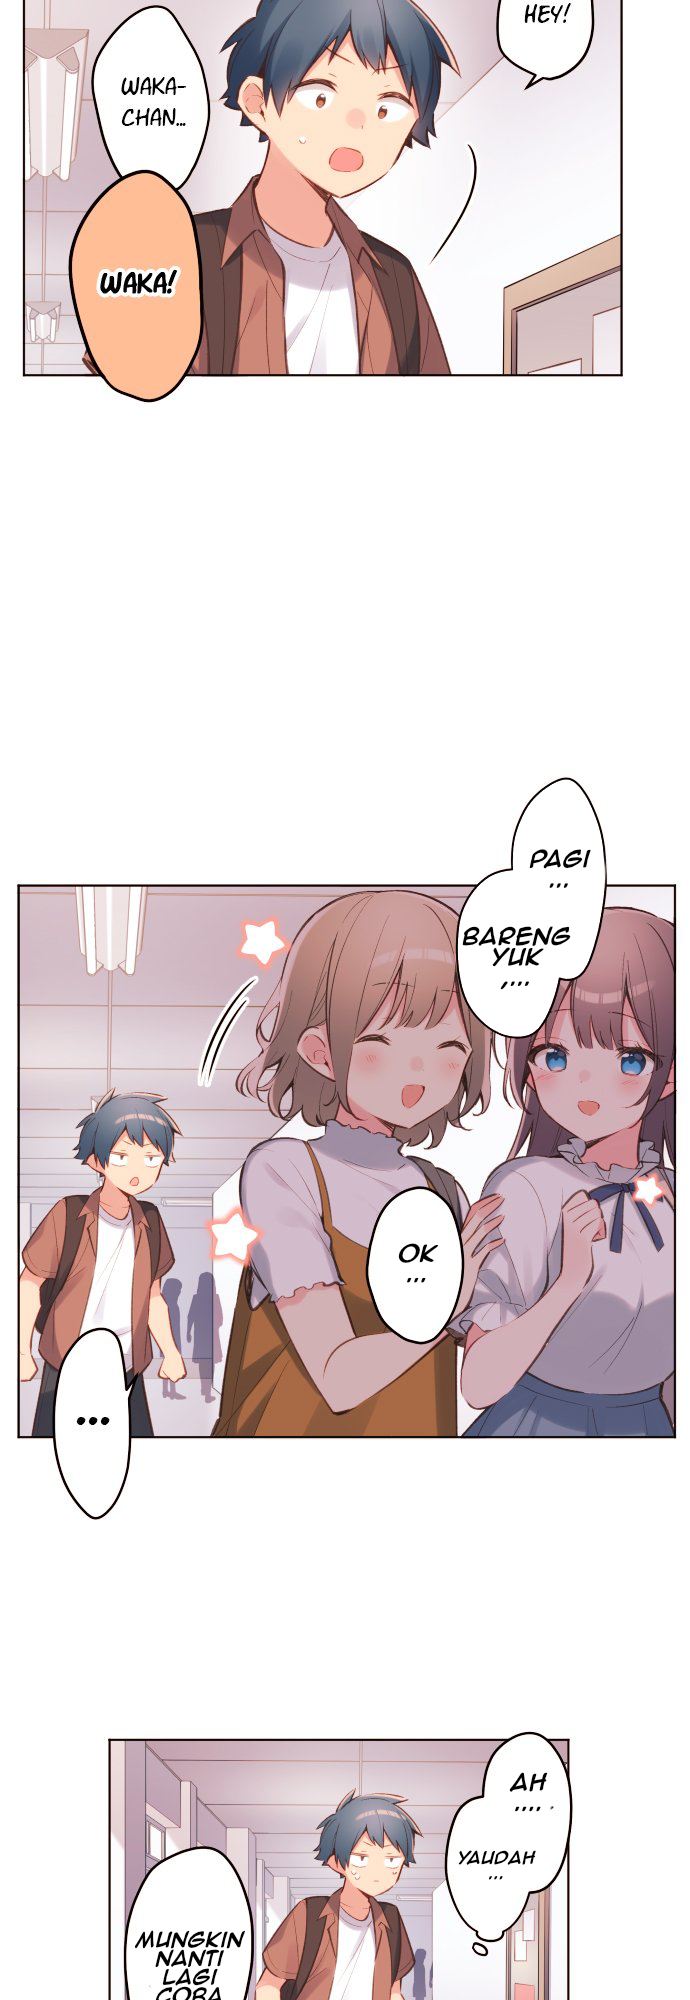 Waka-chan Is Flirty Again Chapter 34 18